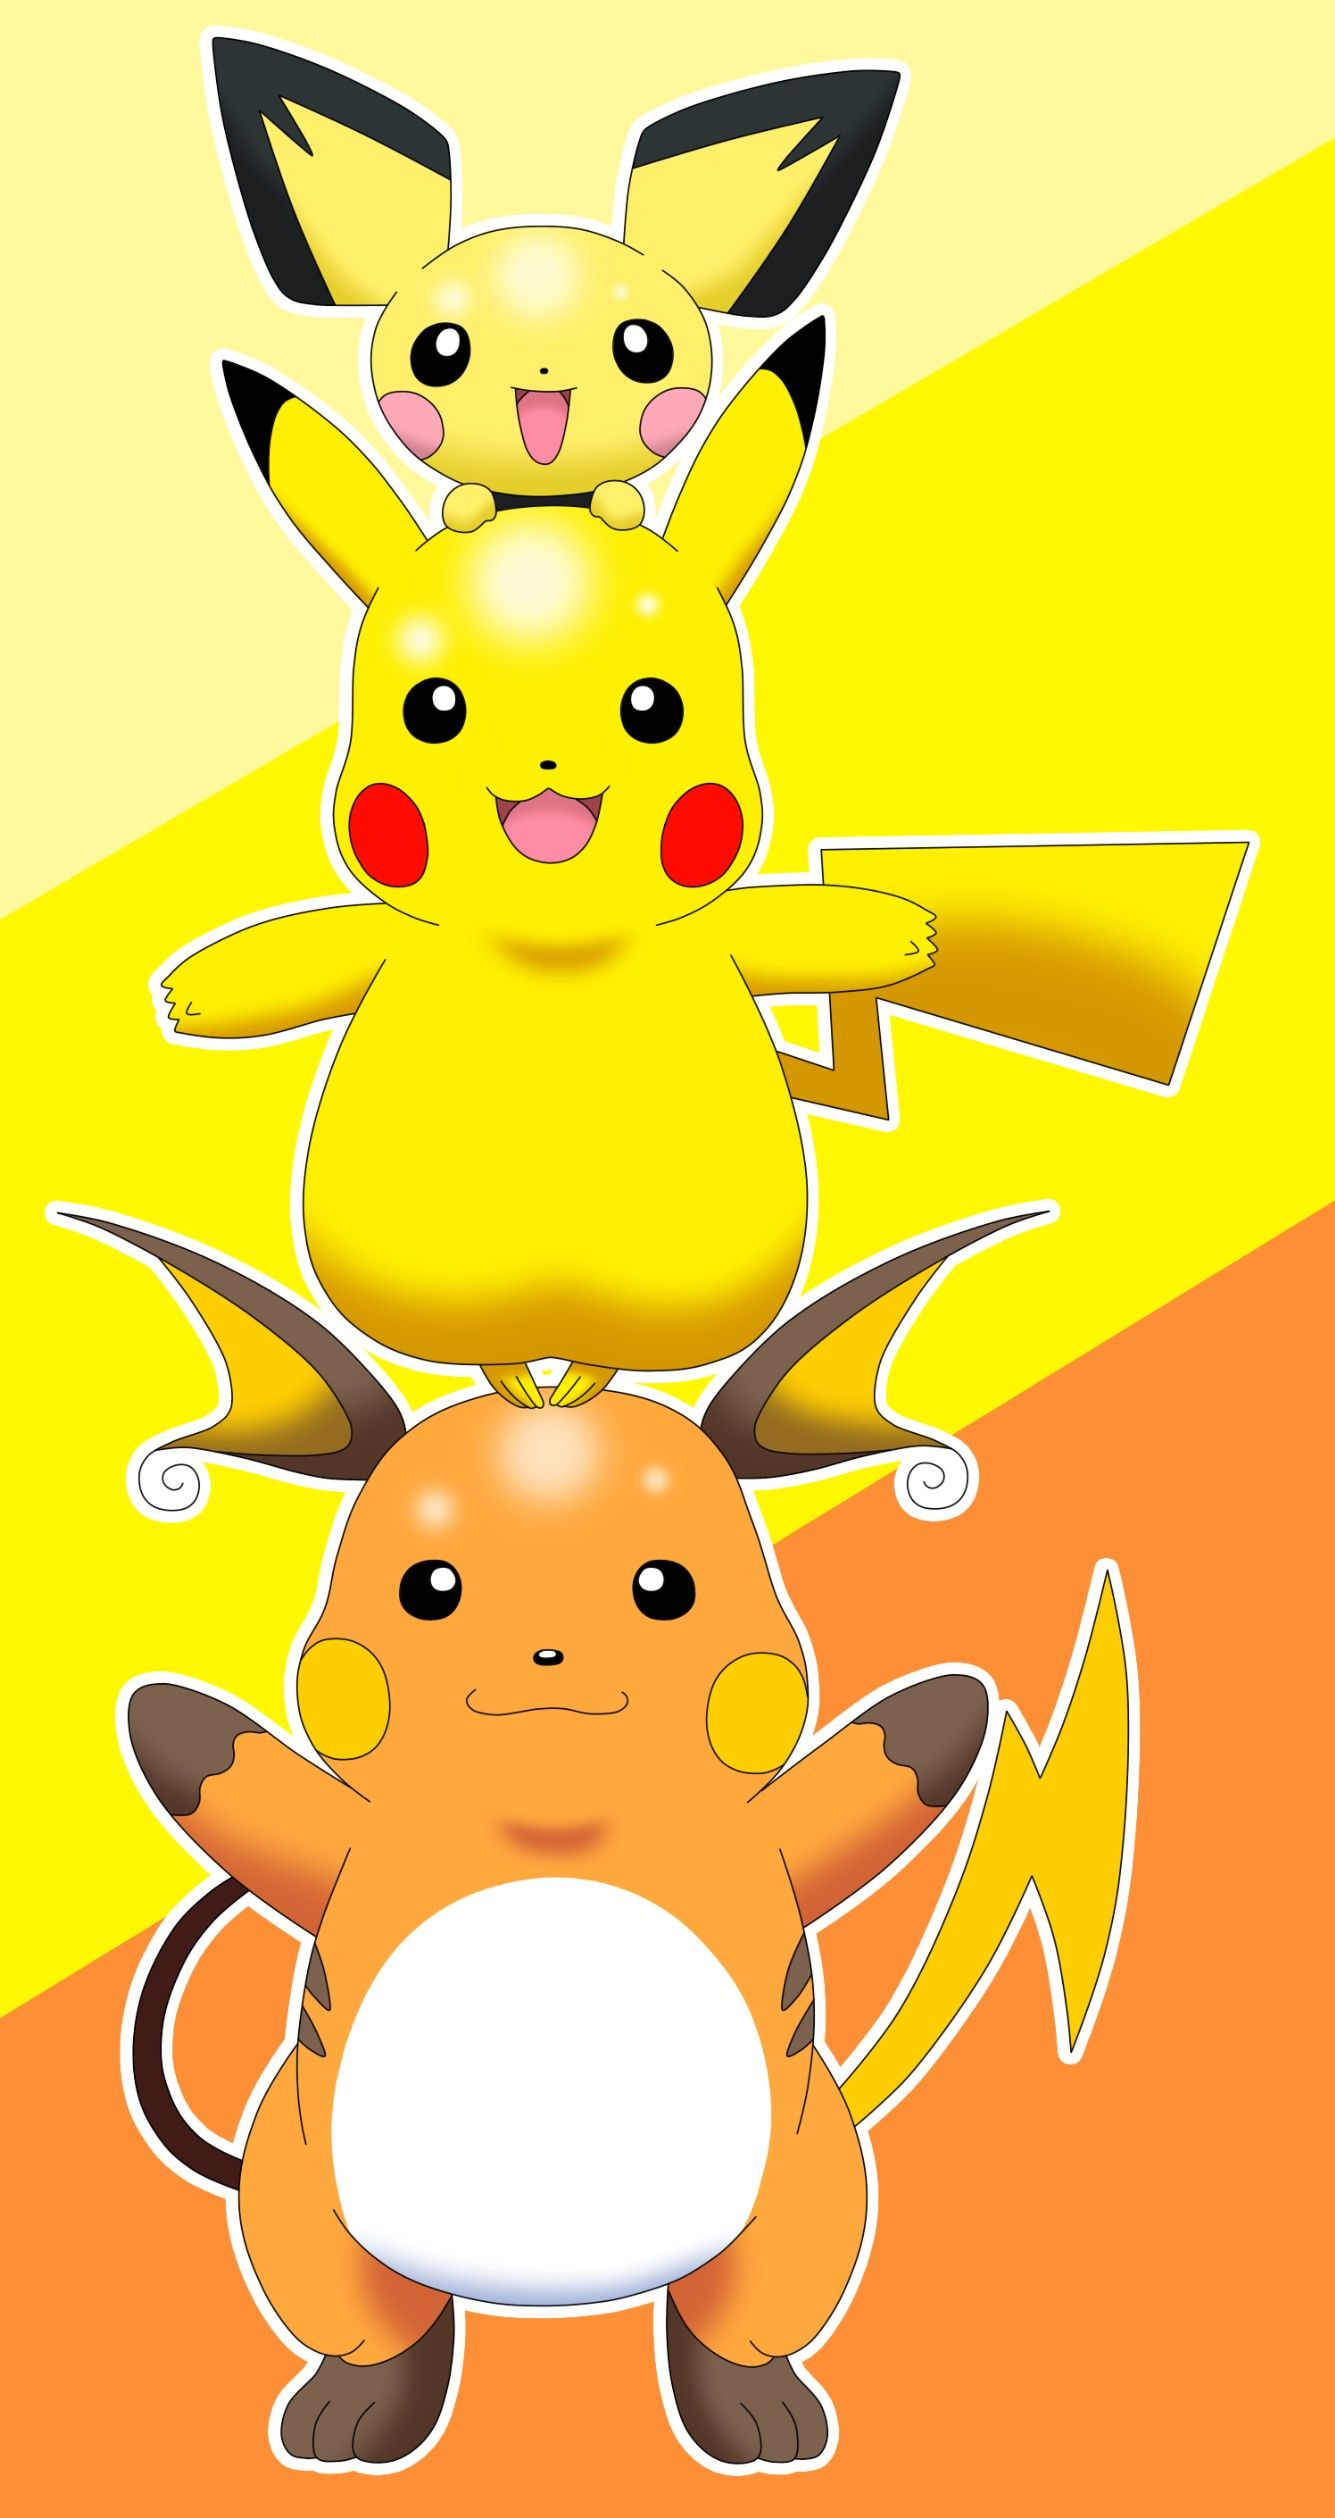 1335x2518 Pin by Gggggdg on Memes | Pikachu raichu, Pichu pikachu raichu, Cute pokemon pictures